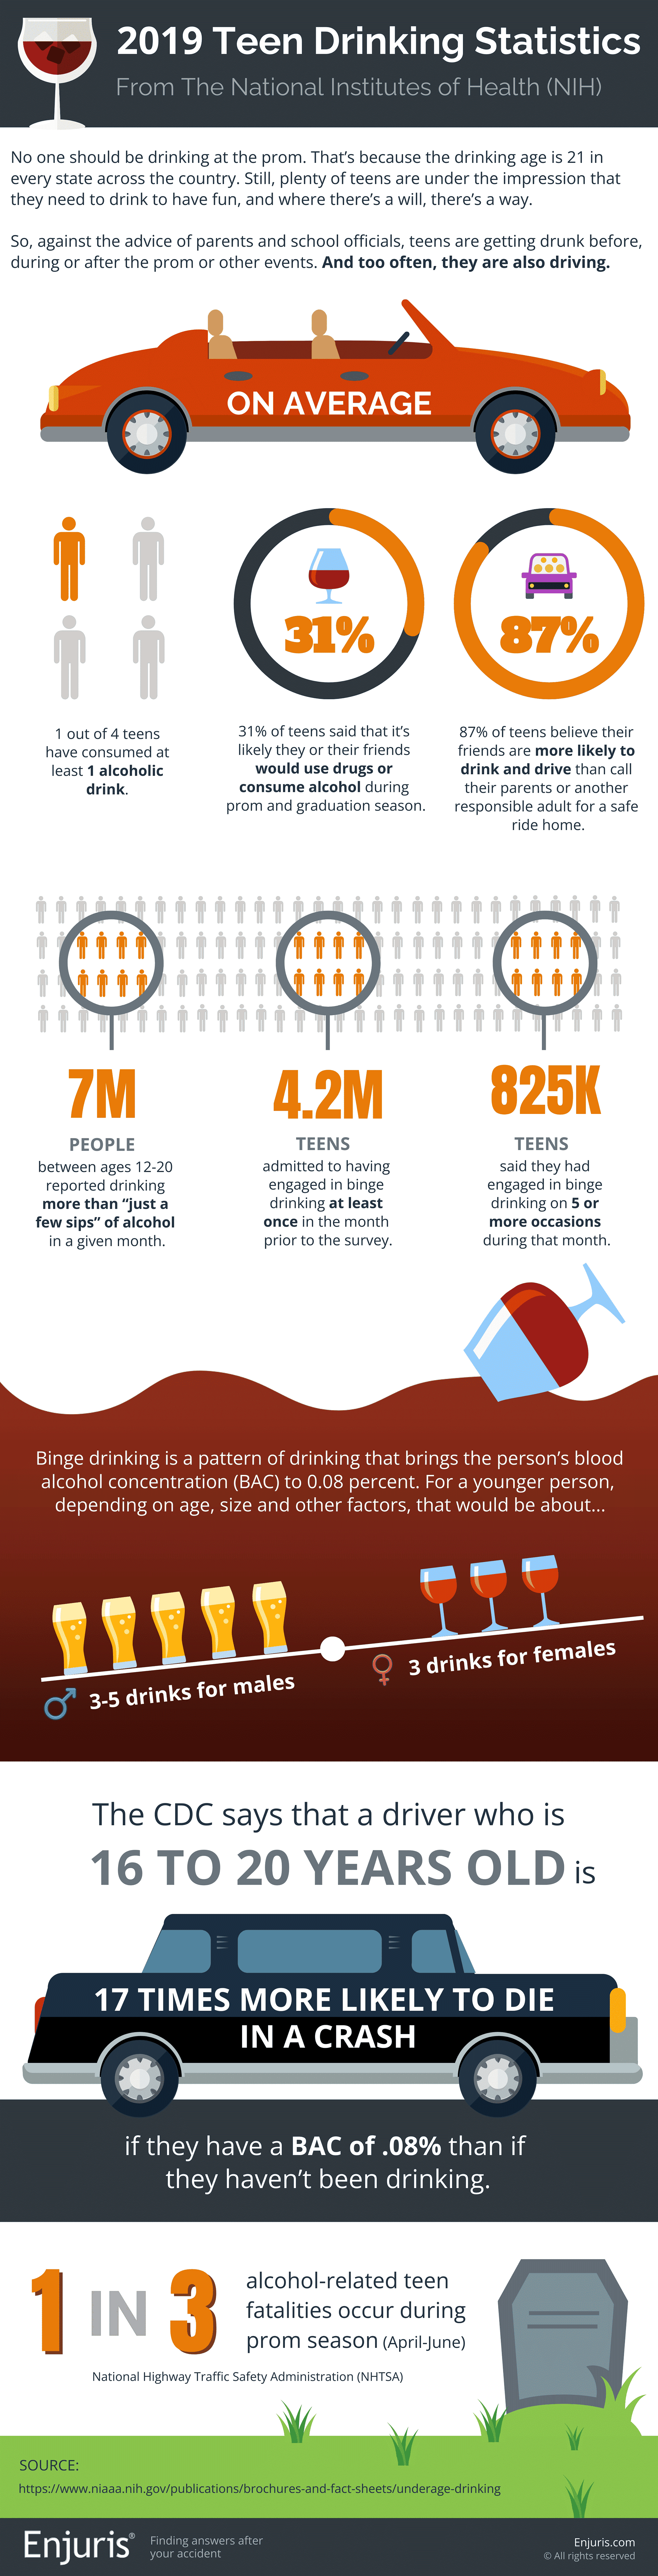 2019 Teen Drinking Statistics infographic